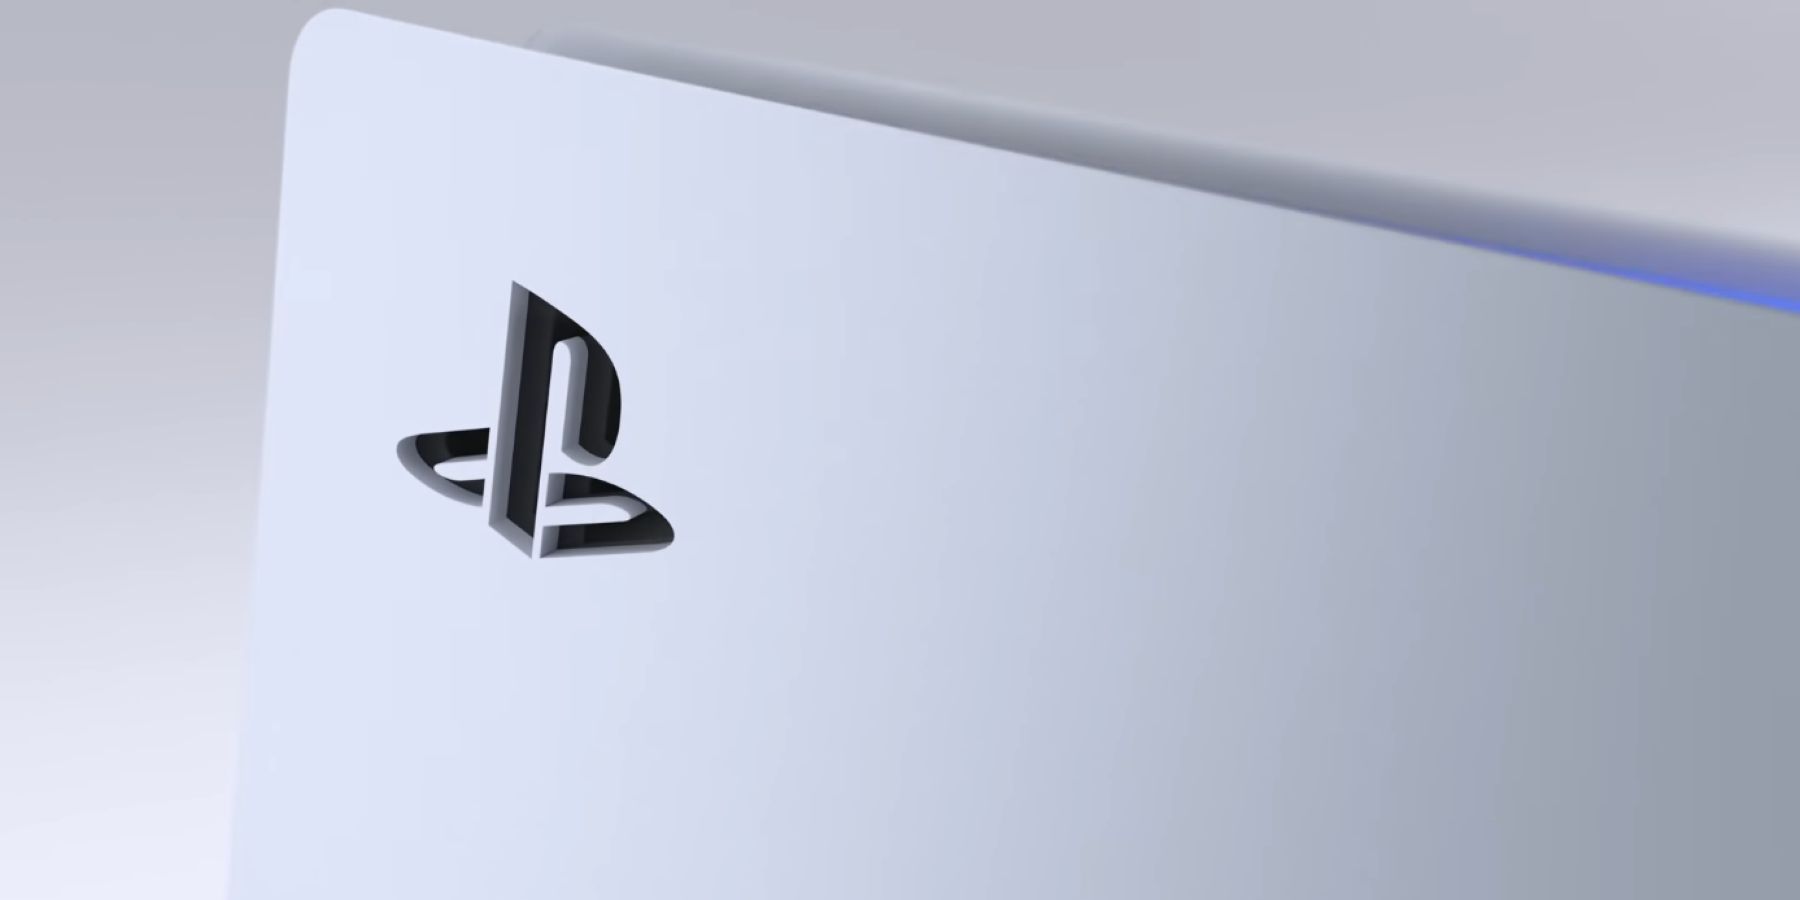 ps5 hardware playstation emblem logo featured